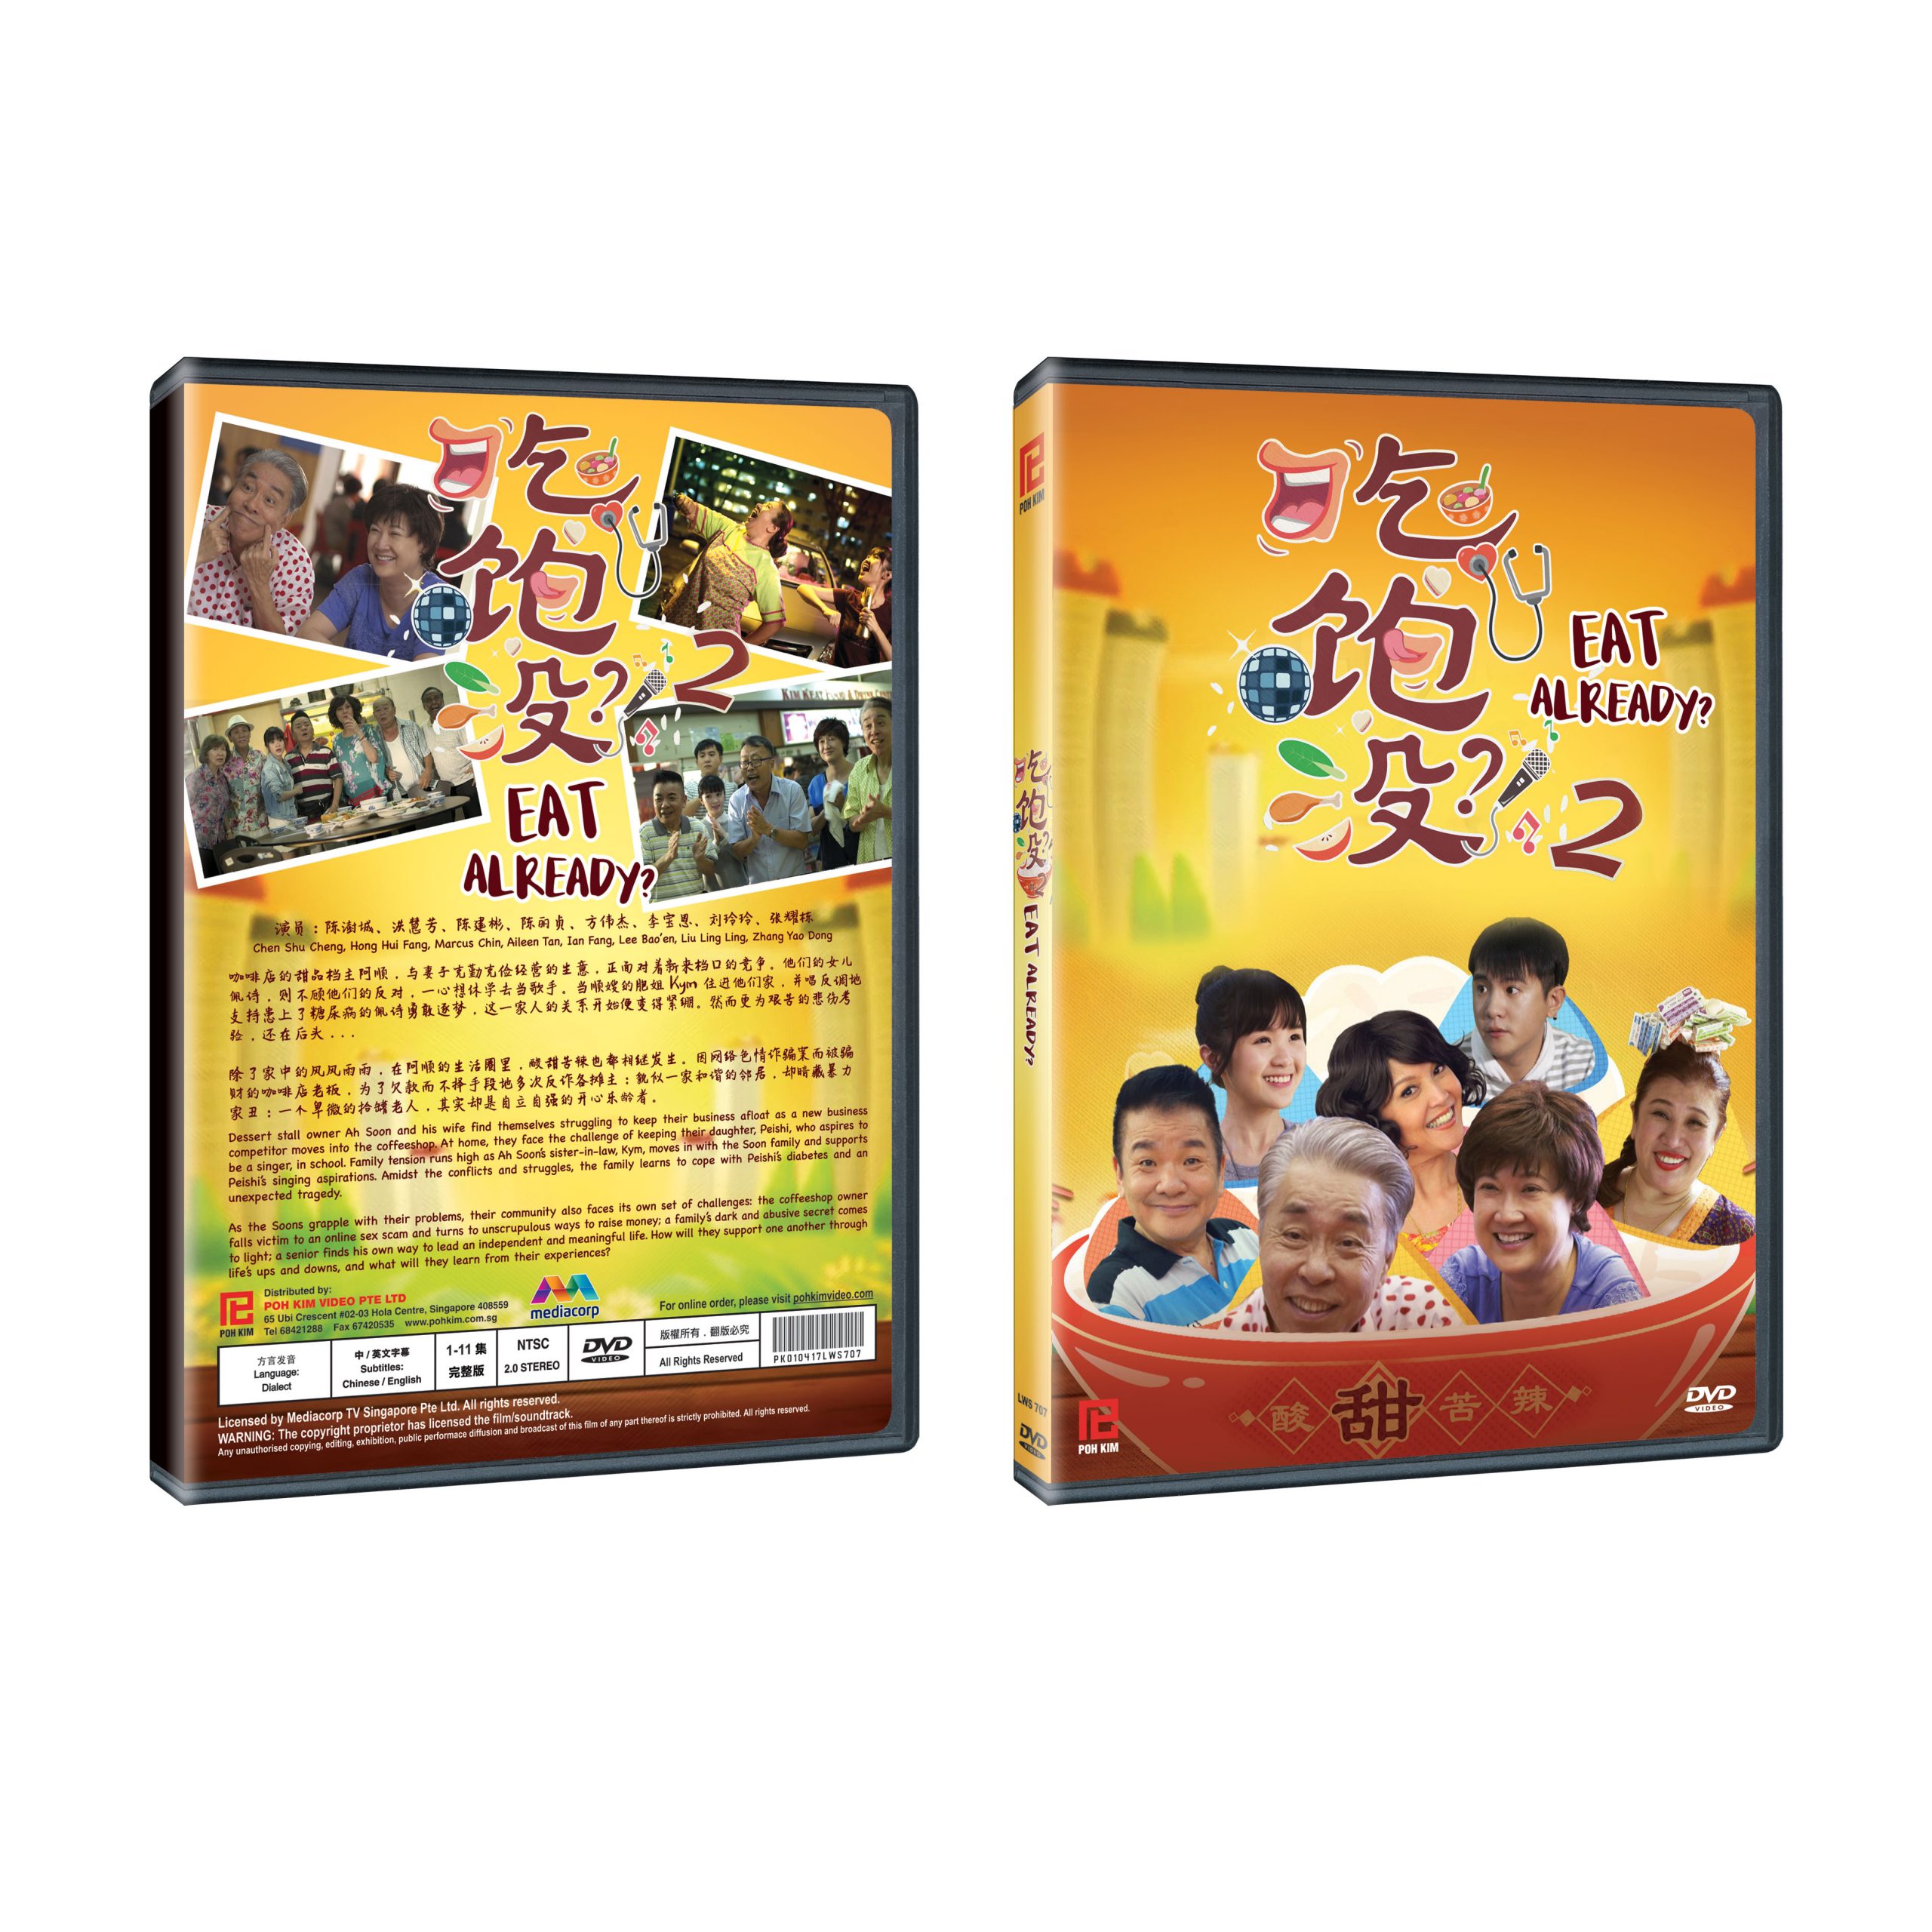 Eat Already? 吃饱没? 2 (Singapore Dialect Drama DVD) - Poh Kim Video